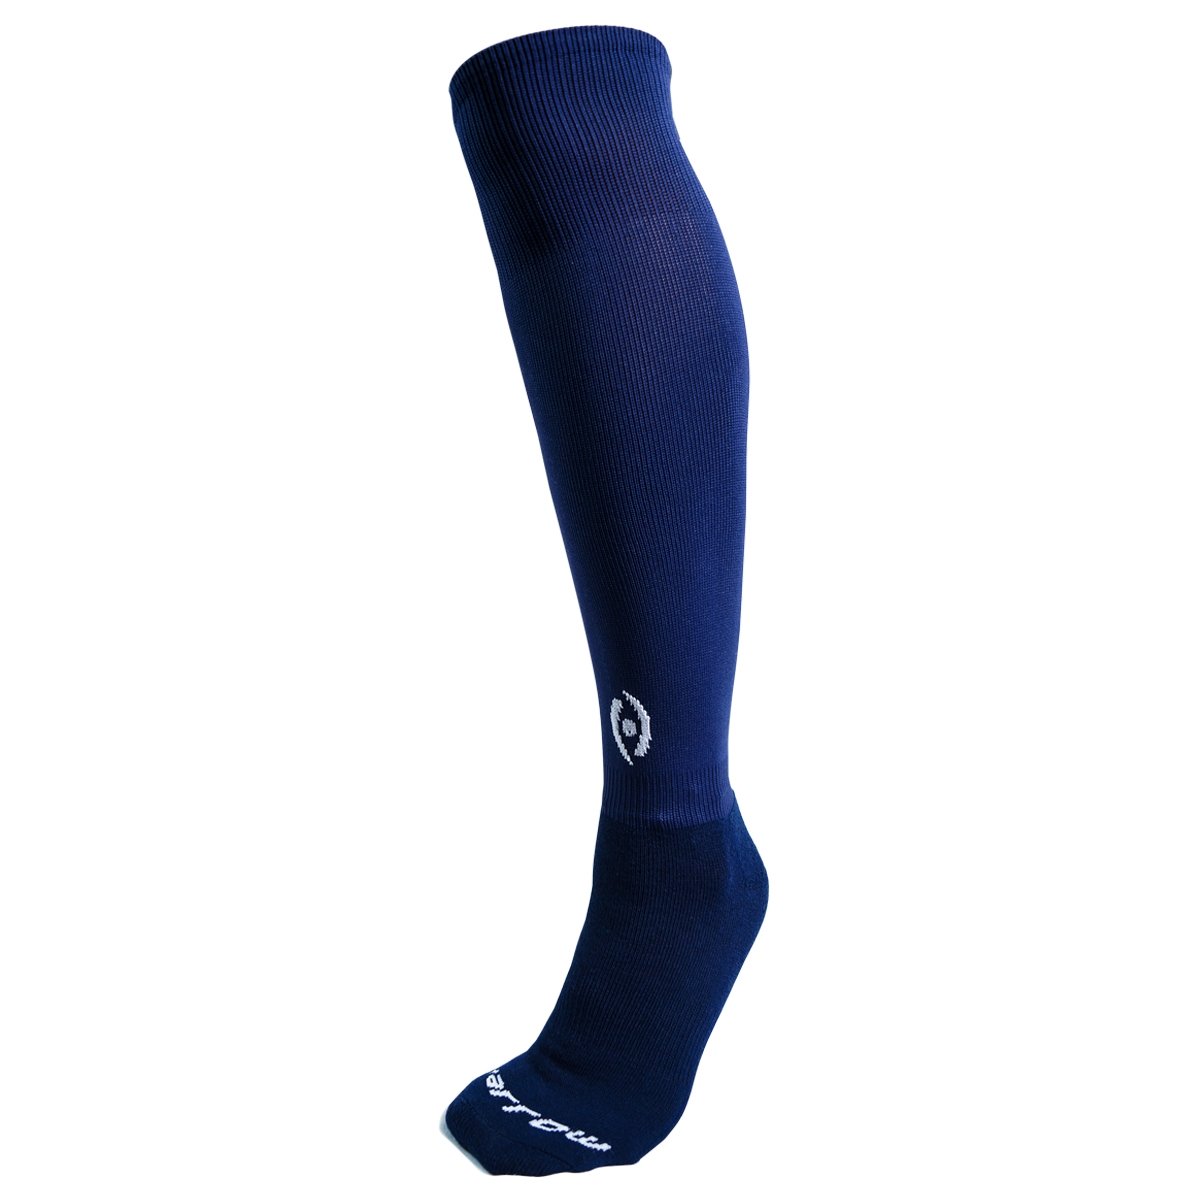 Hocsocx Blue Field Hockey Sticks Socks Medium